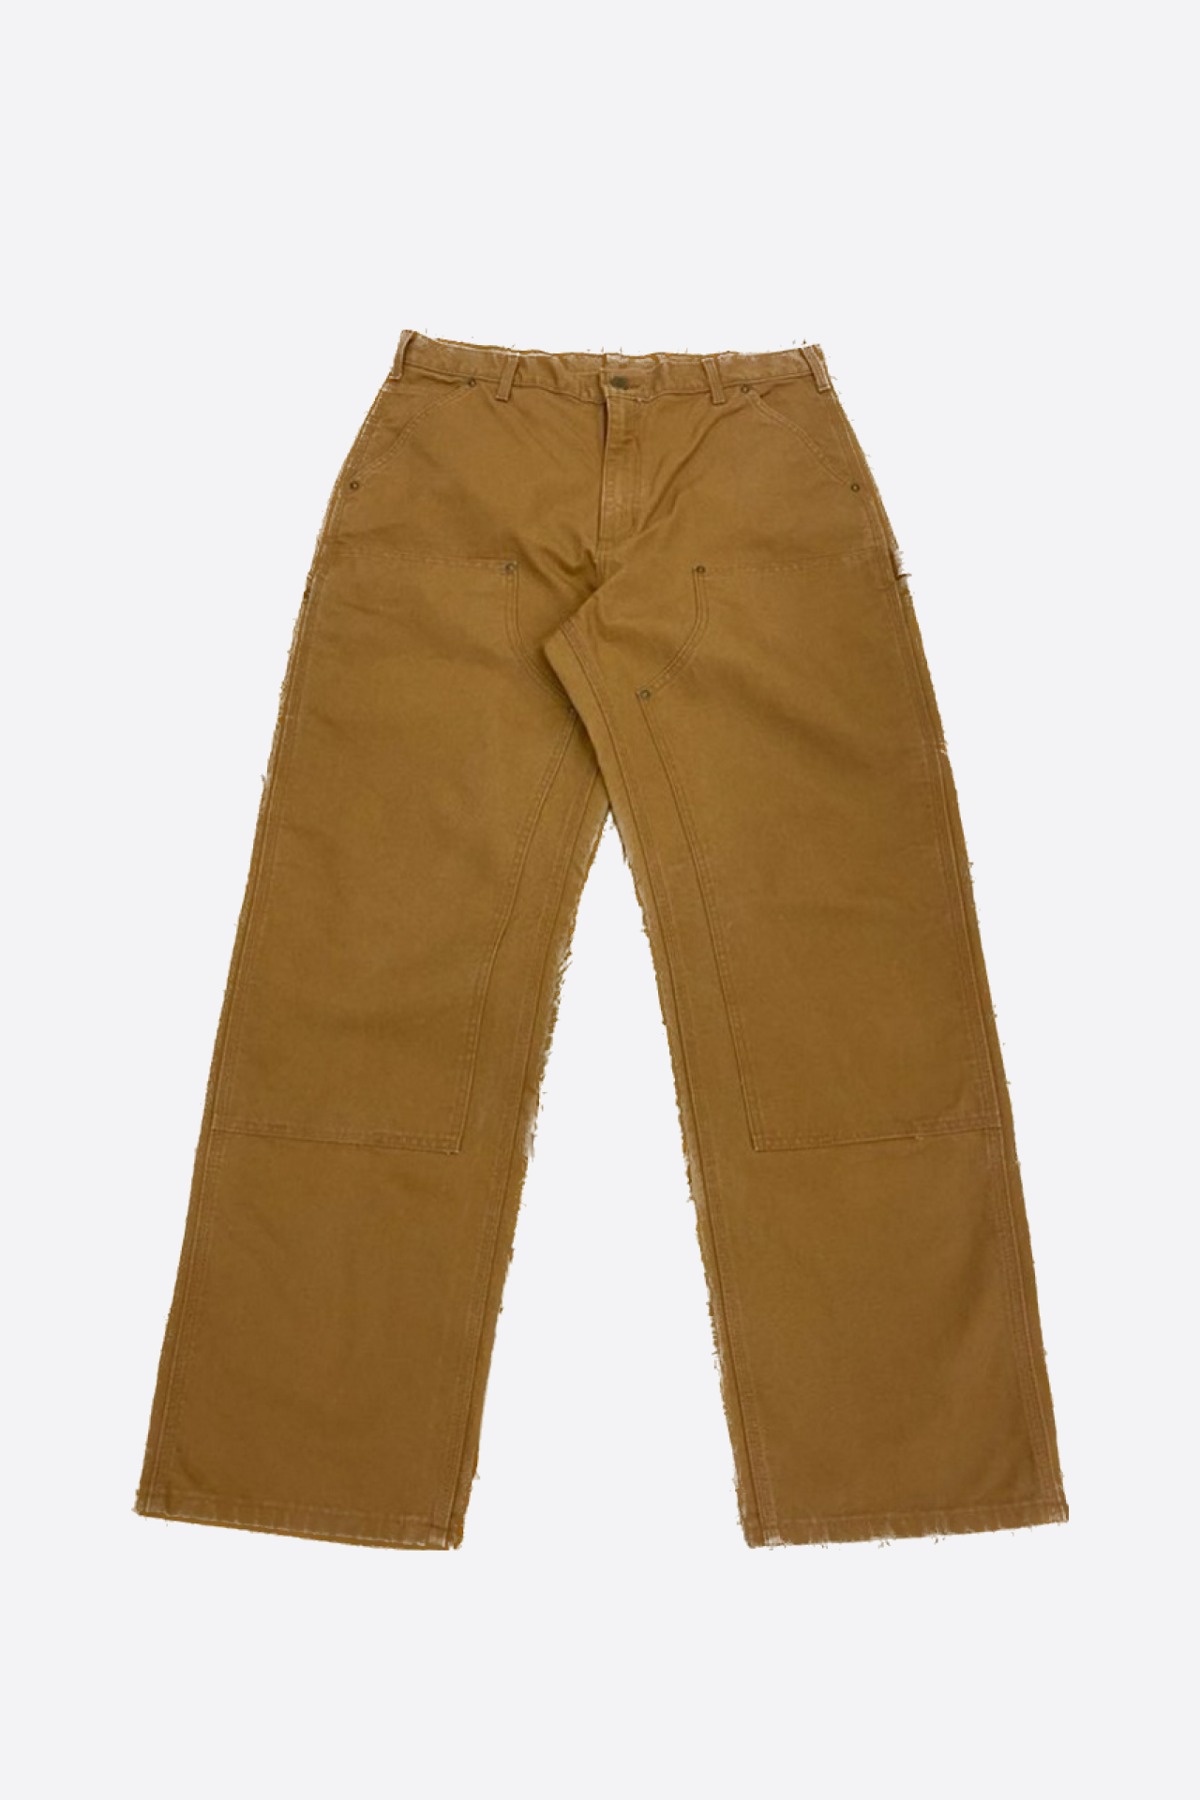 Carhartt Brown Double Knee Pants USA Made (36inch) - With Homie 위드호미